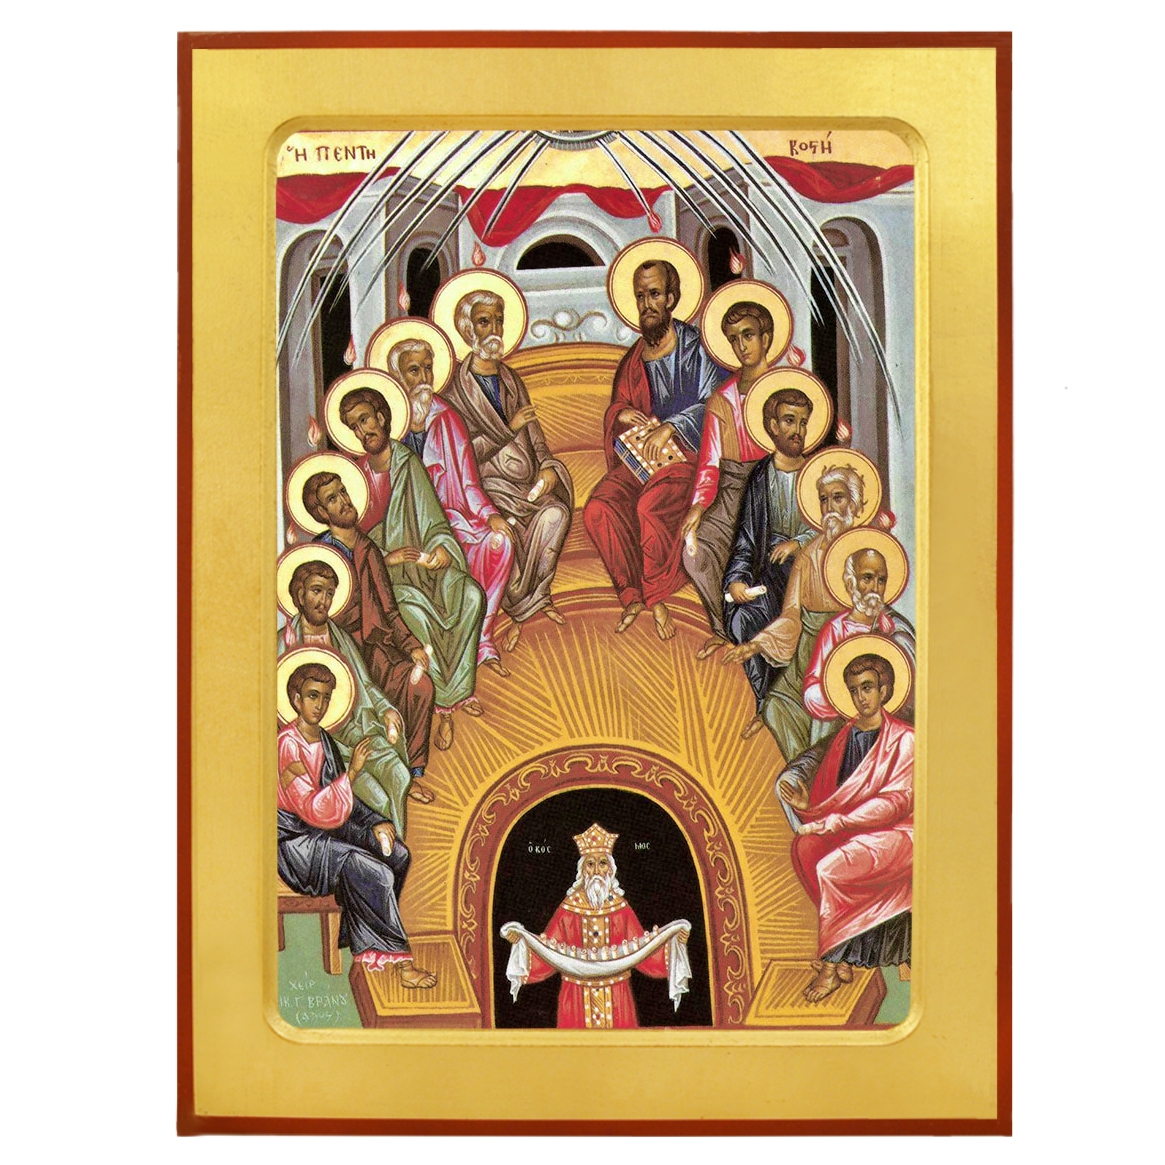 The Pentecost Byzantine Wooden Icon